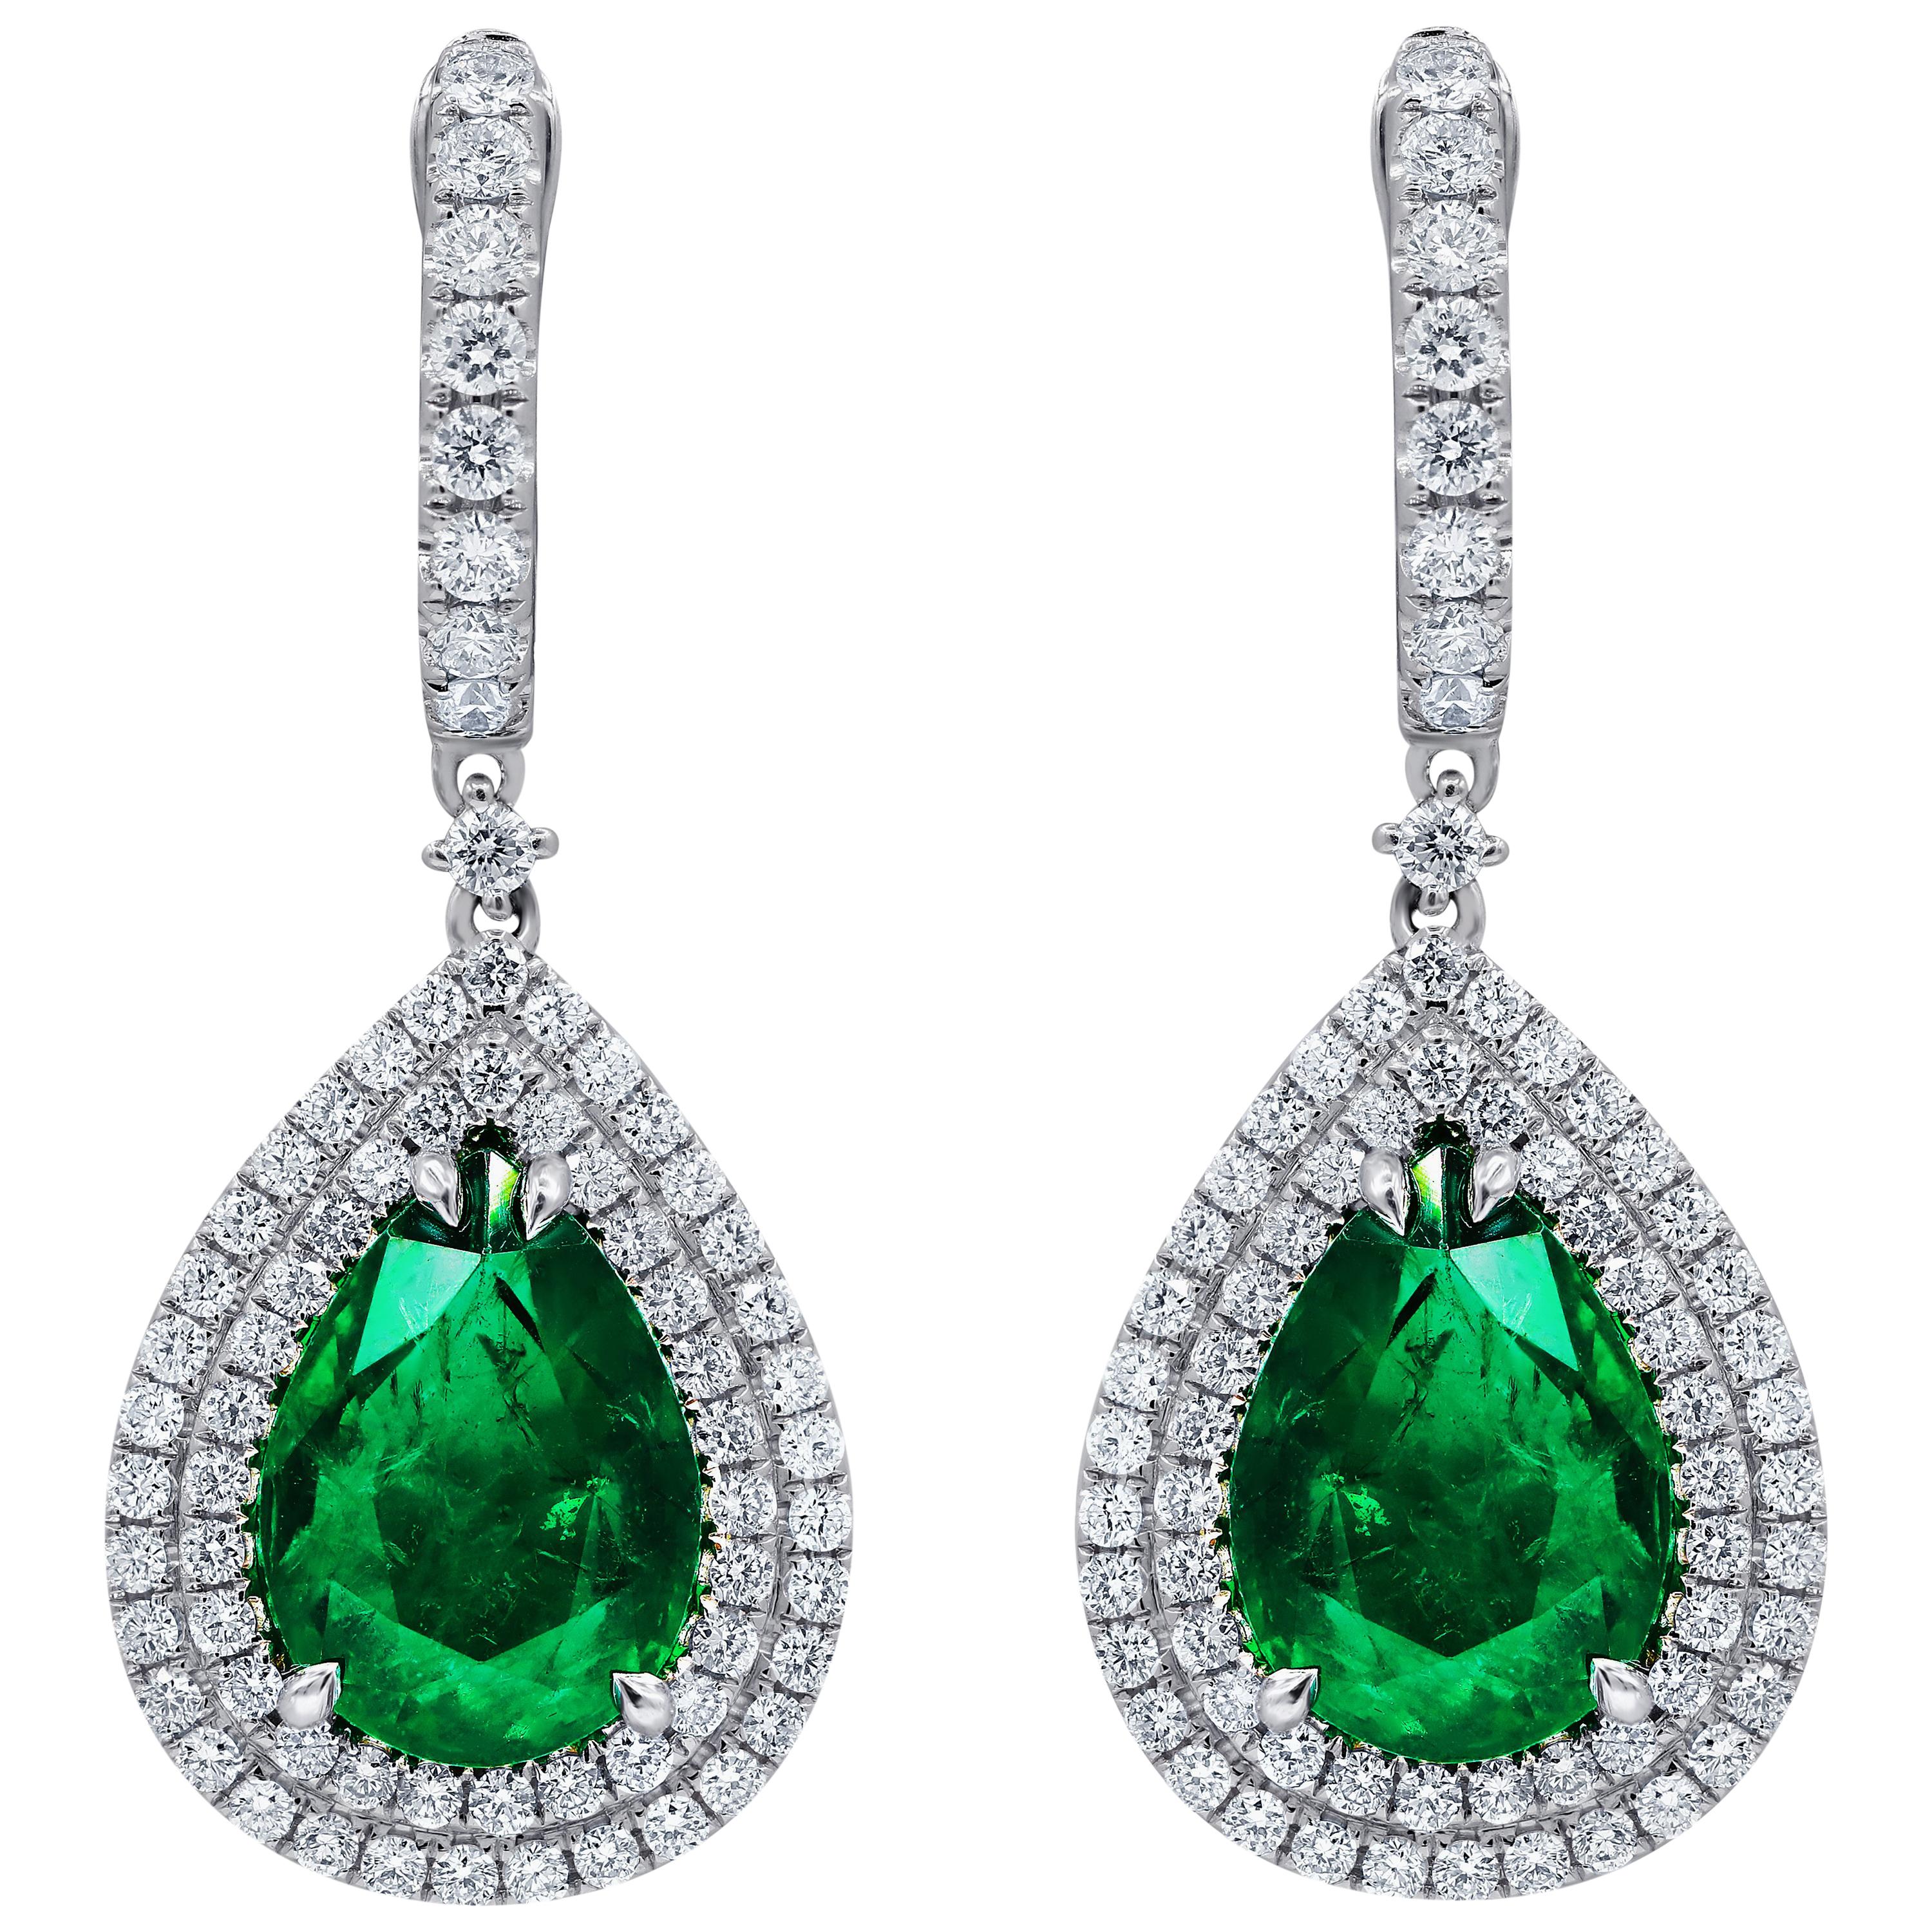 GIA Certified 10.68 Carats Green Emerald and Diamond Earrings